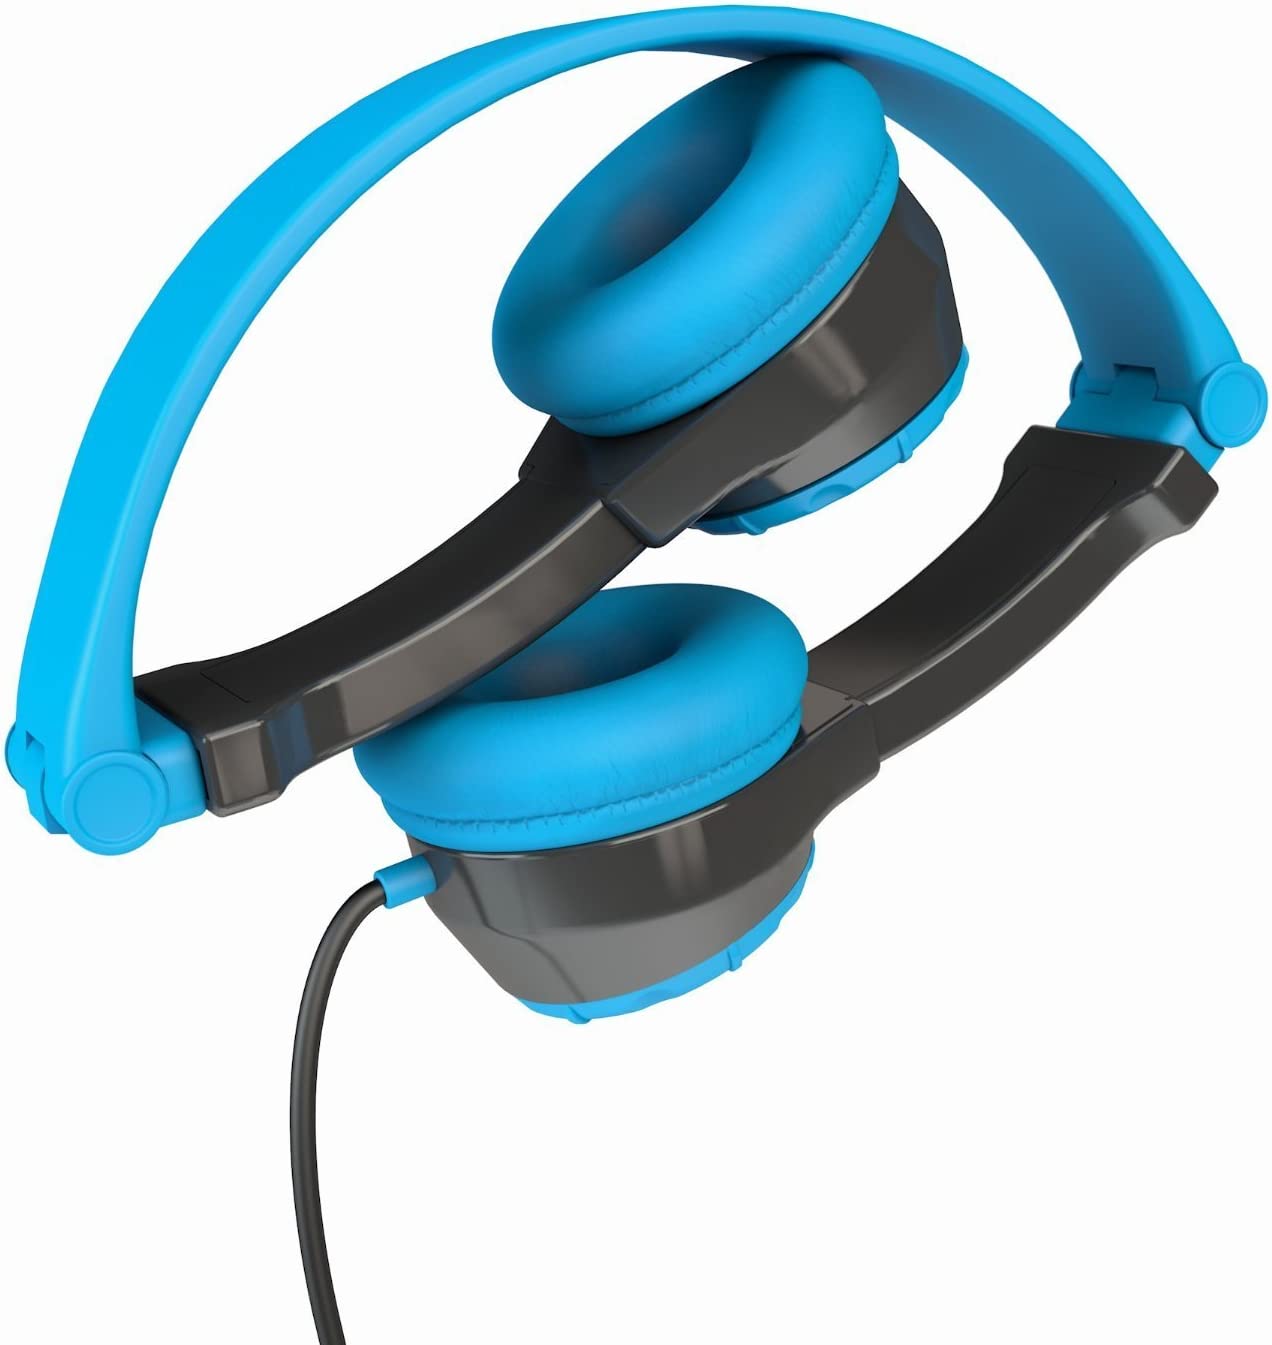 Comfortable FOLDING KIDS headphones for children from JLAB, blue color